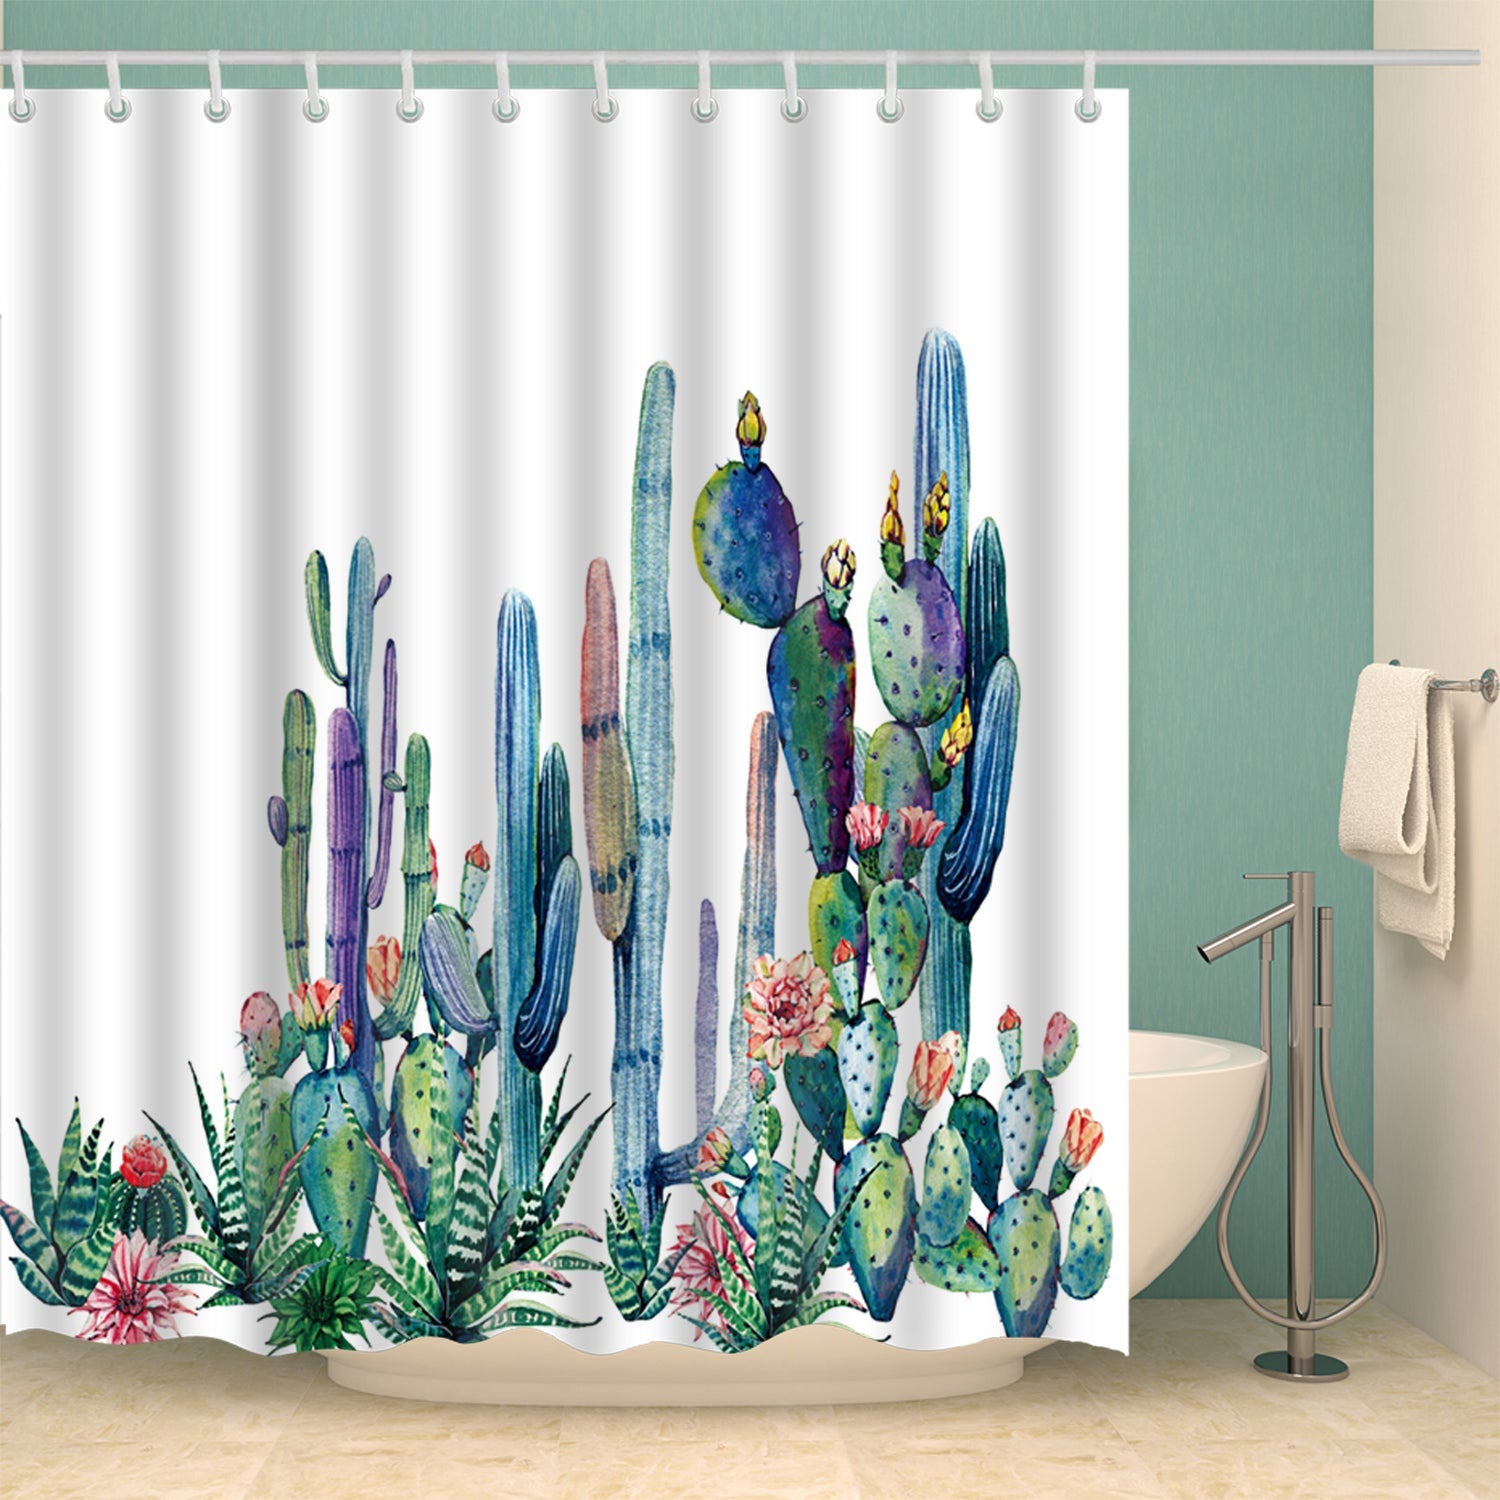 Clear and Nature Saguaro Cactus Shower Curtain Set - 4 Pcs